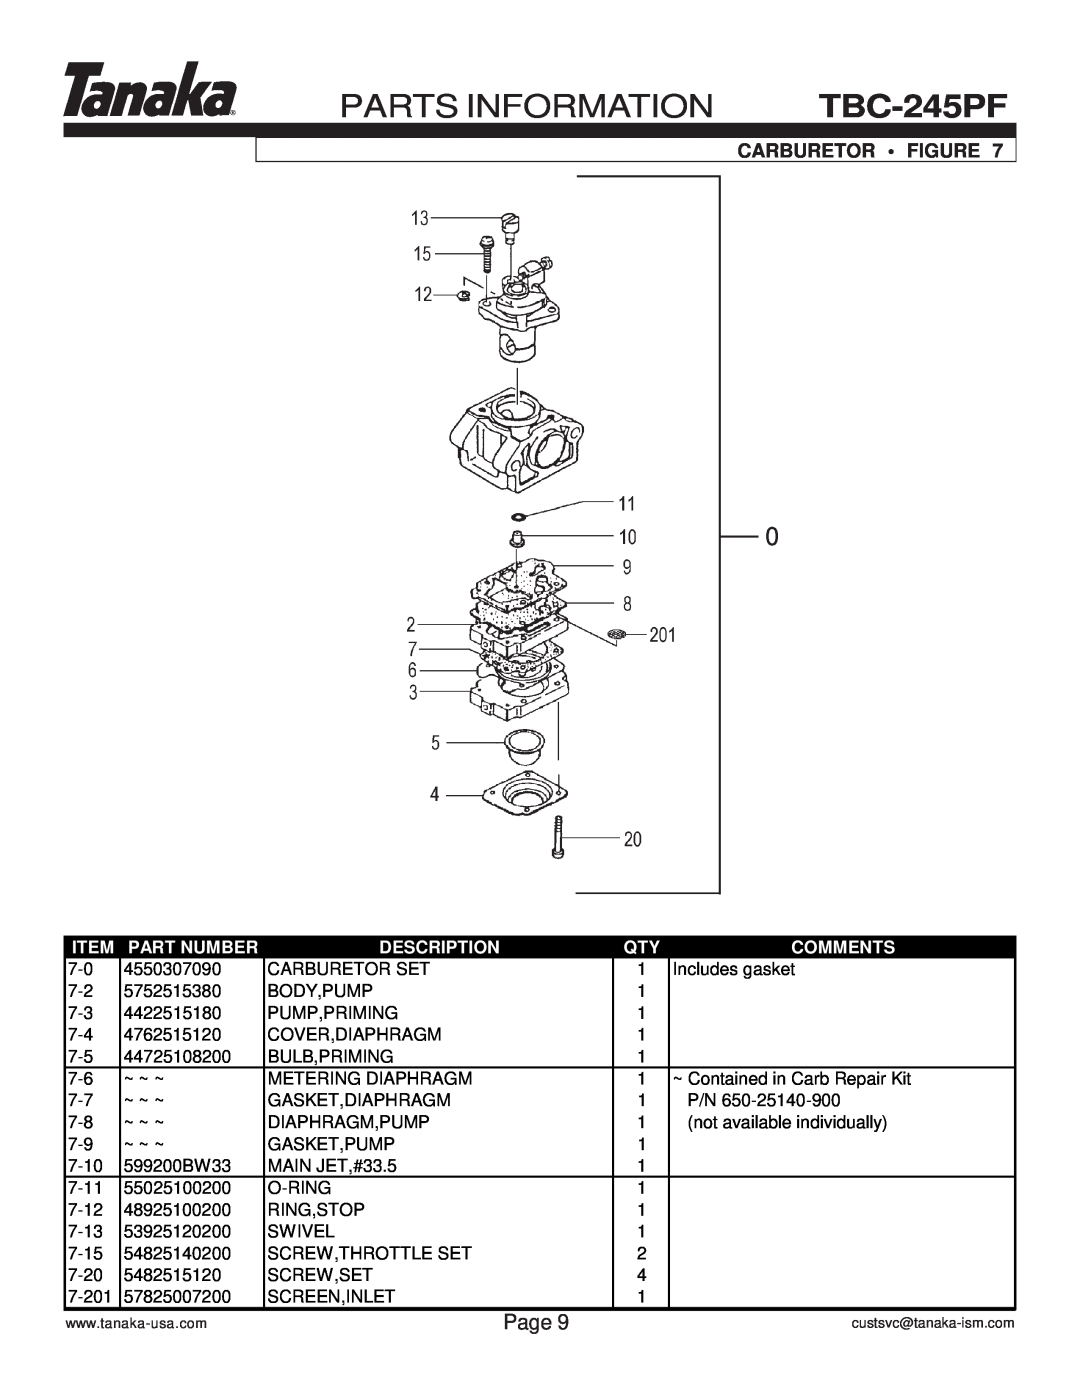 Tanaka TBC-245PF manual Carburetor Figure, Parts Information, Page, Part Number, Description, Comments 